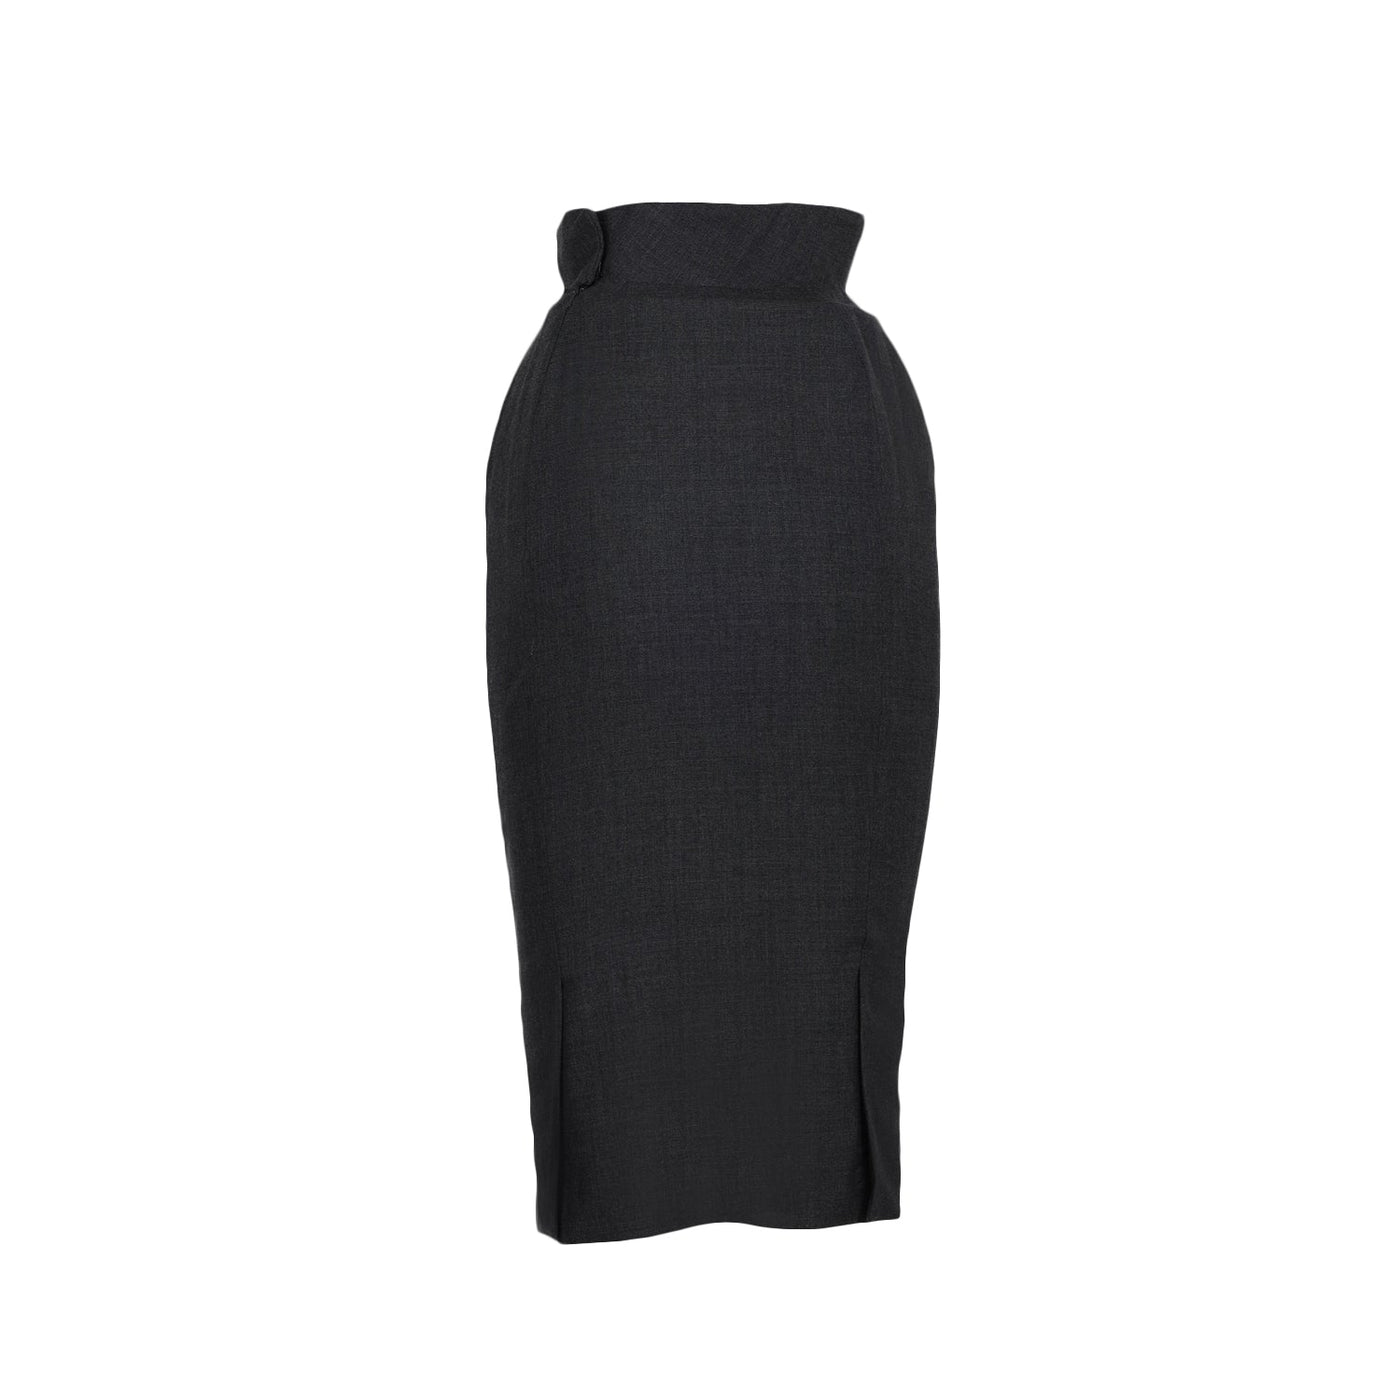 Vivienne Westwood Gold Label Couture peg skirt suit set pre-owned